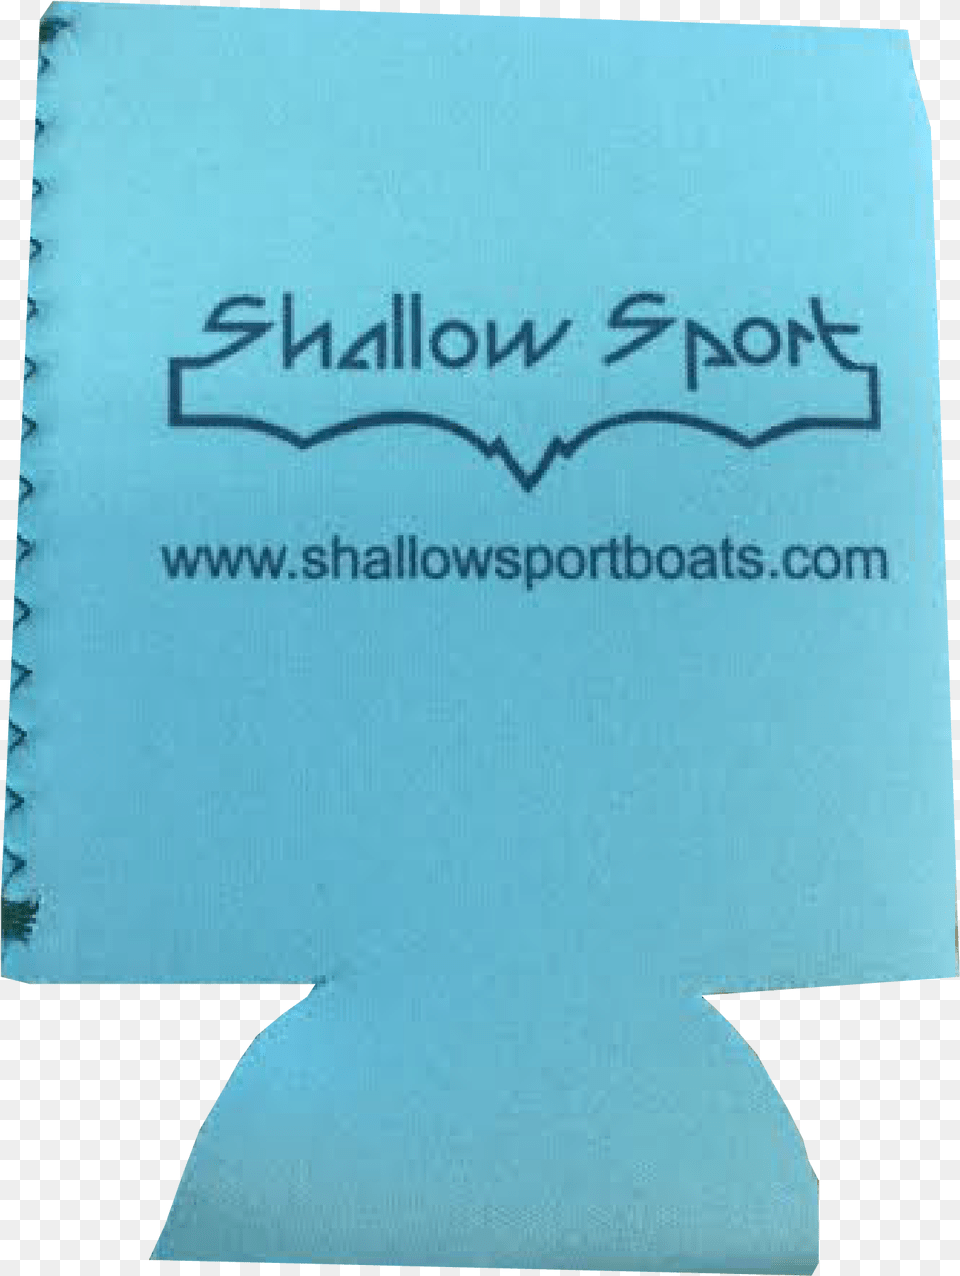 Shallow Sport, Book, Publication, Paper, Text Png